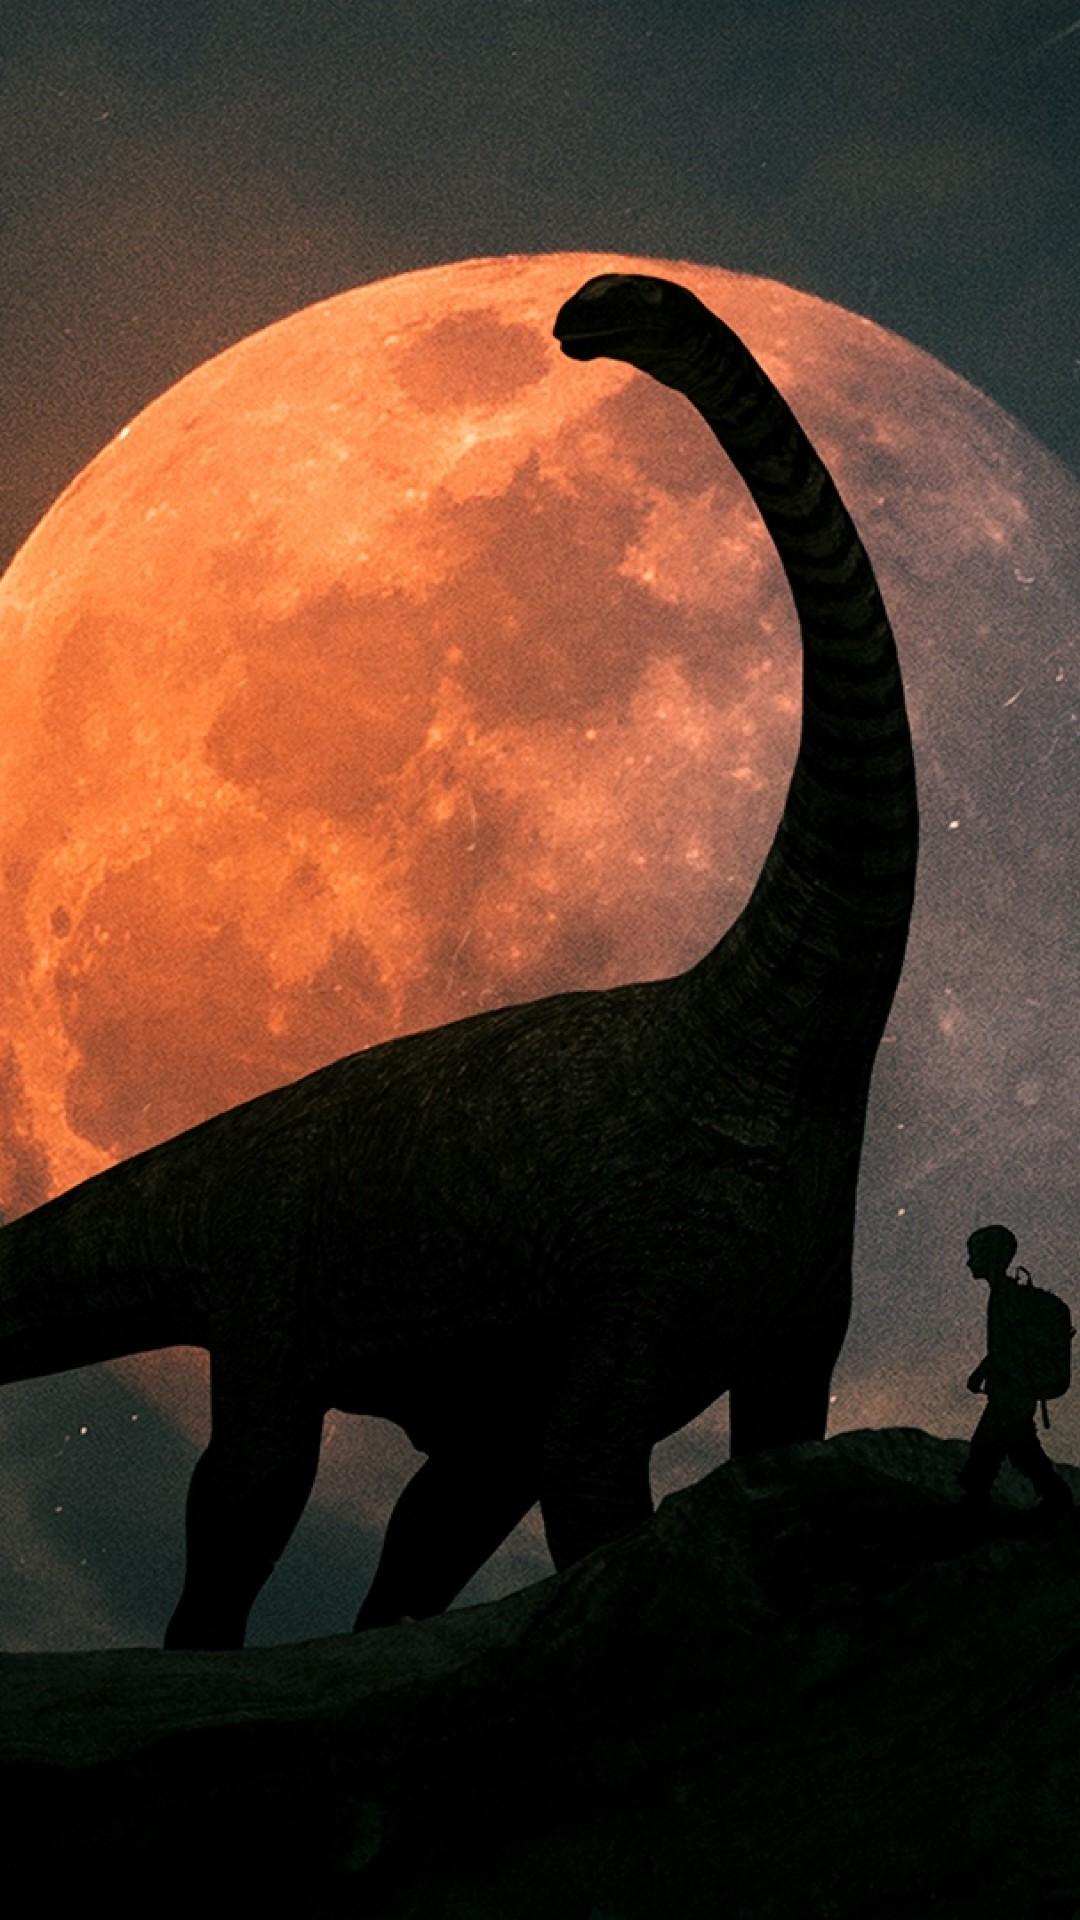 Dinosaur silhouettes HD Wallpaper iPhone 6 / 6S Plus